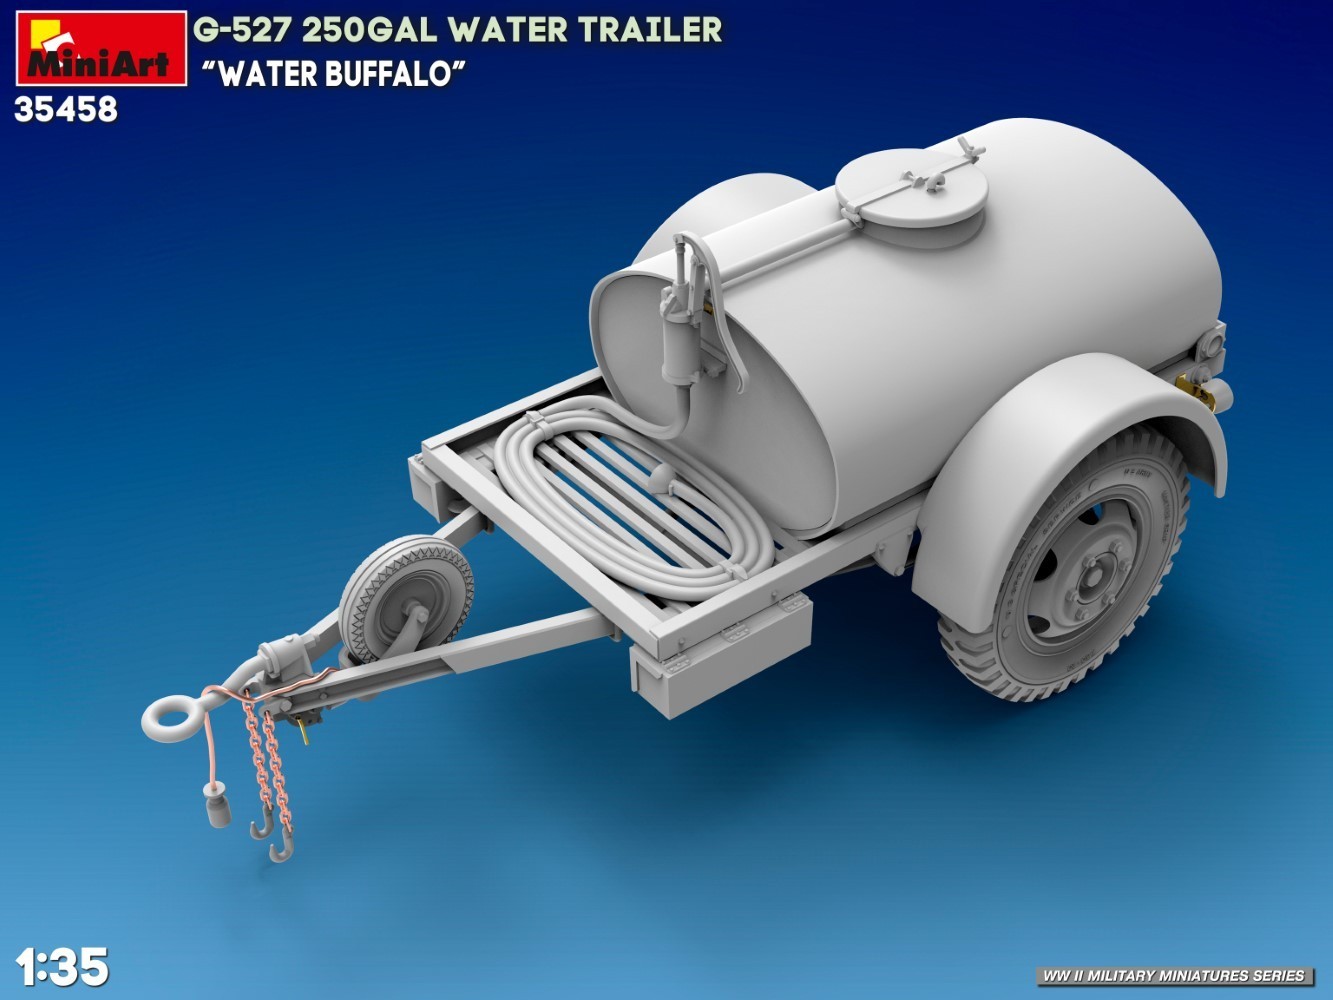 MiniArt G-527 250GAL Water Trailer “Water Buffalo” CAD-3